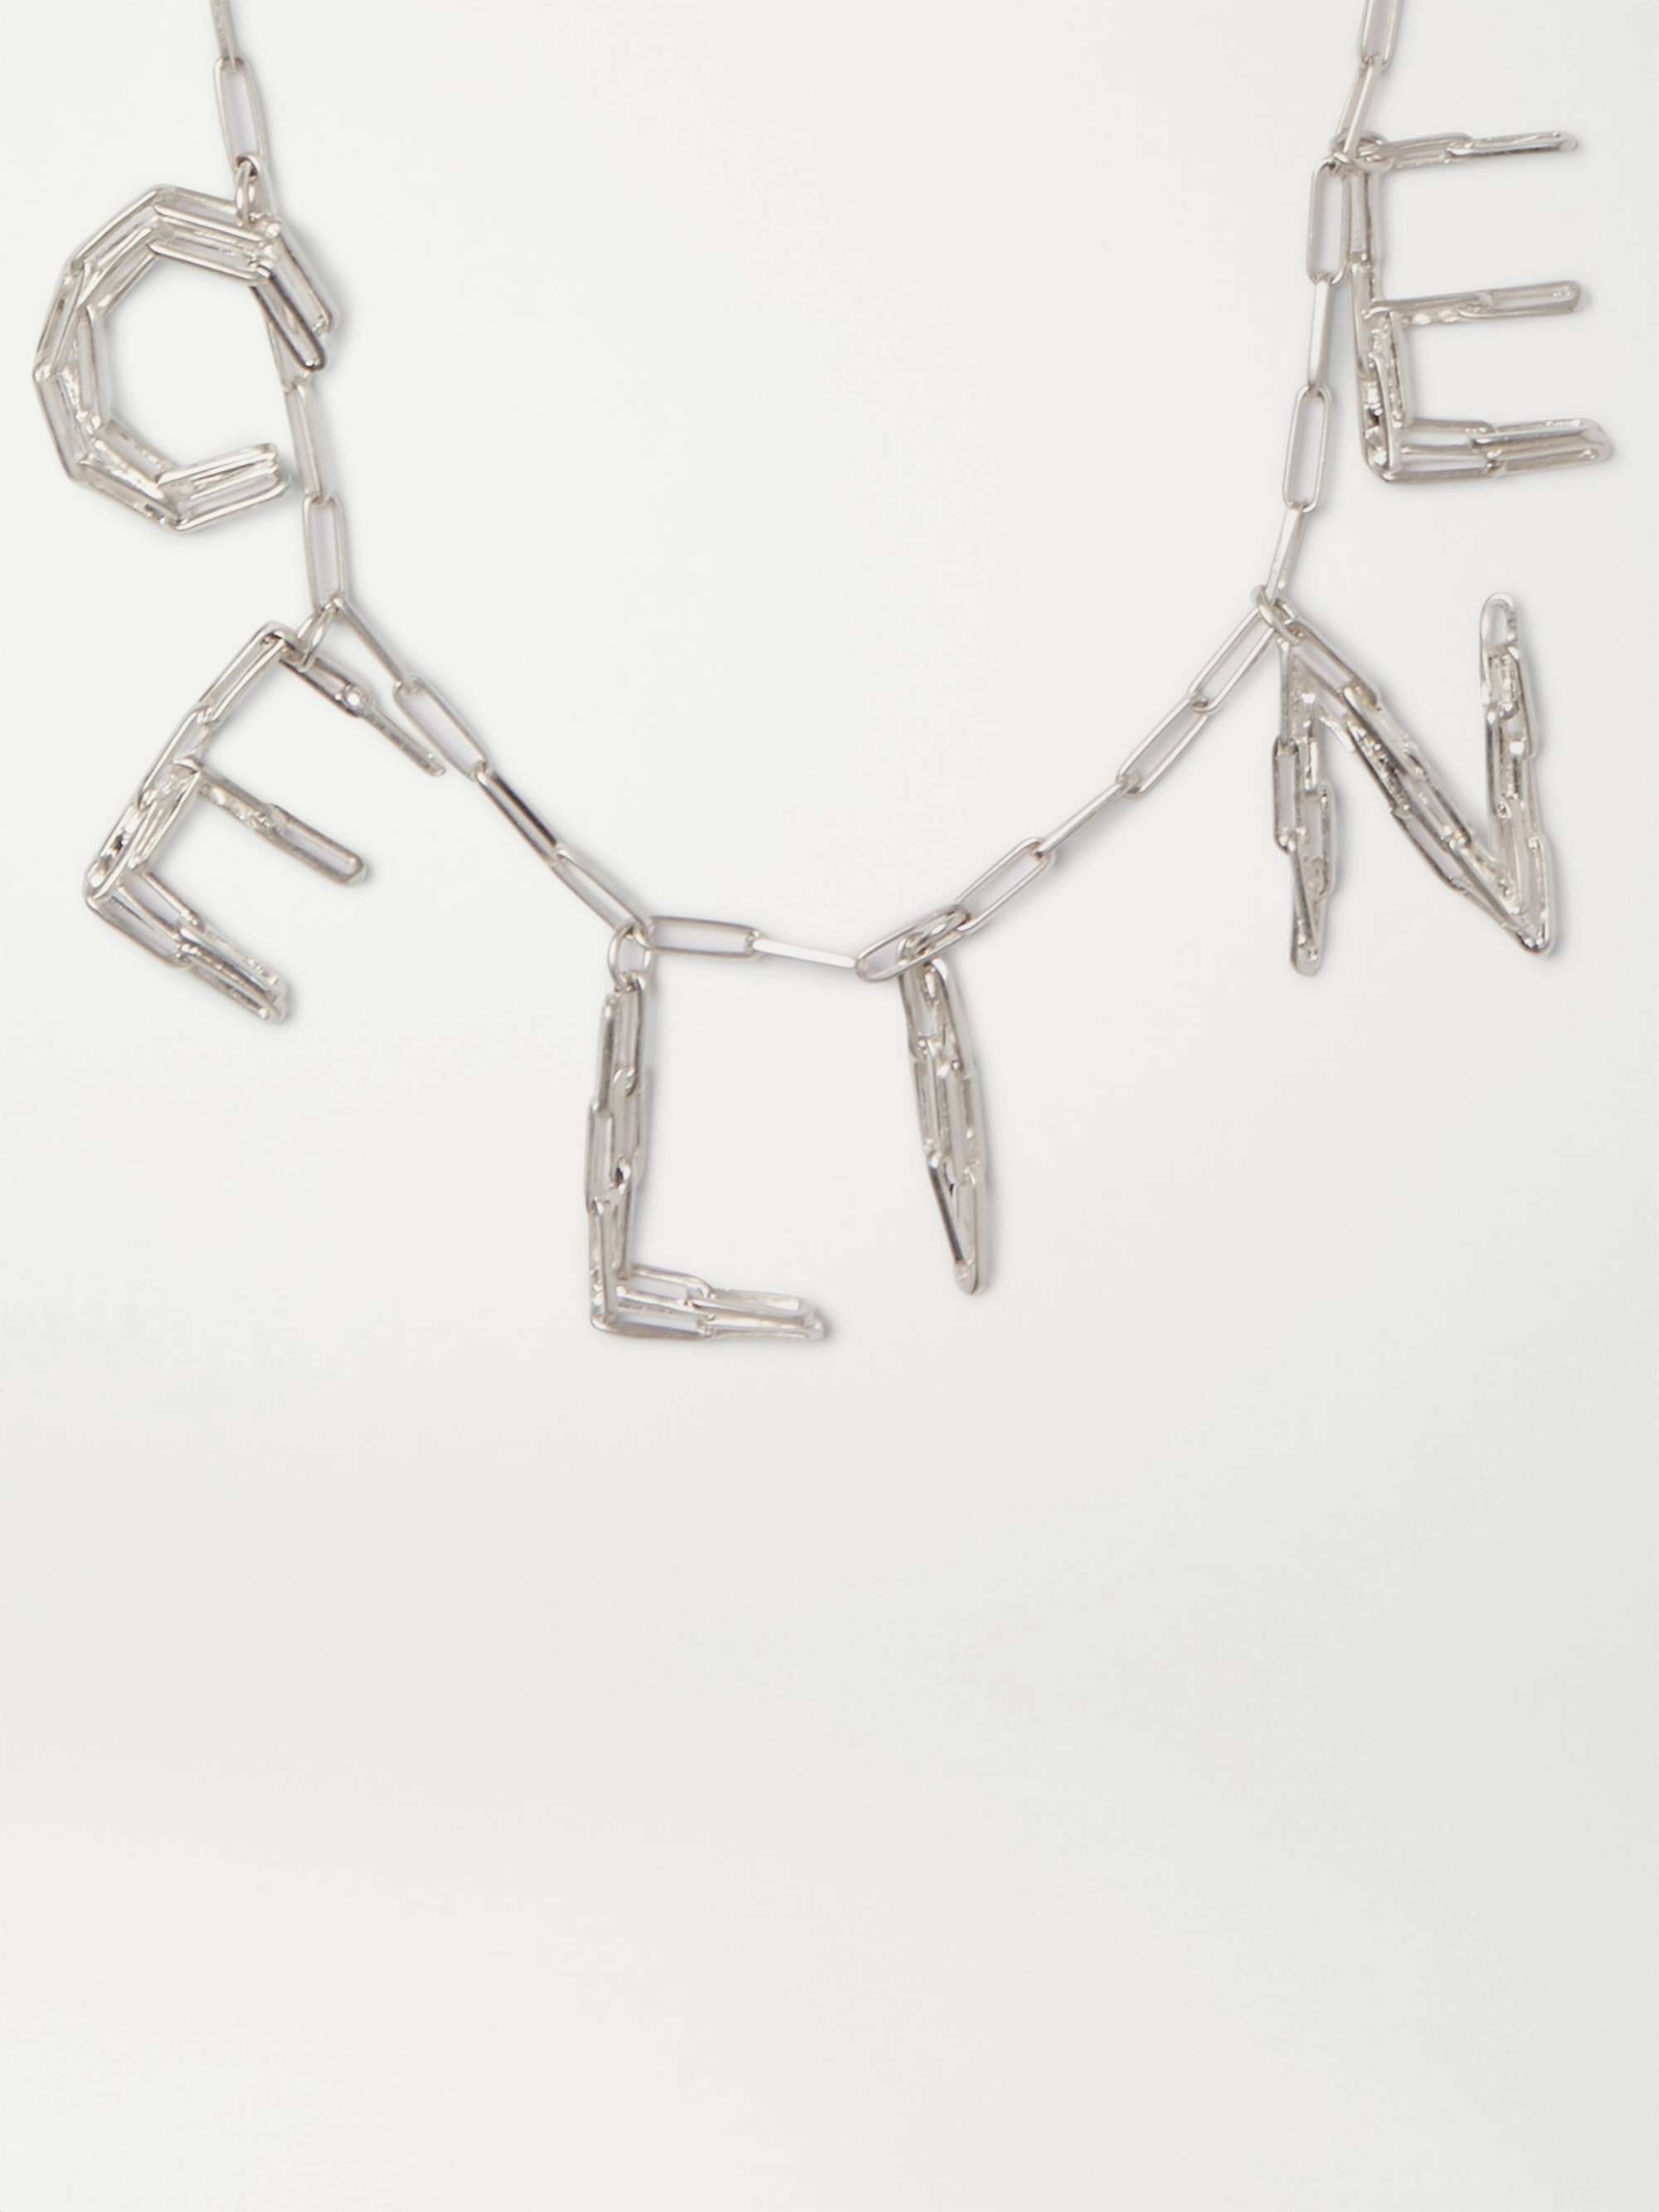 CELINE HOMME Silver-Tone Necklace